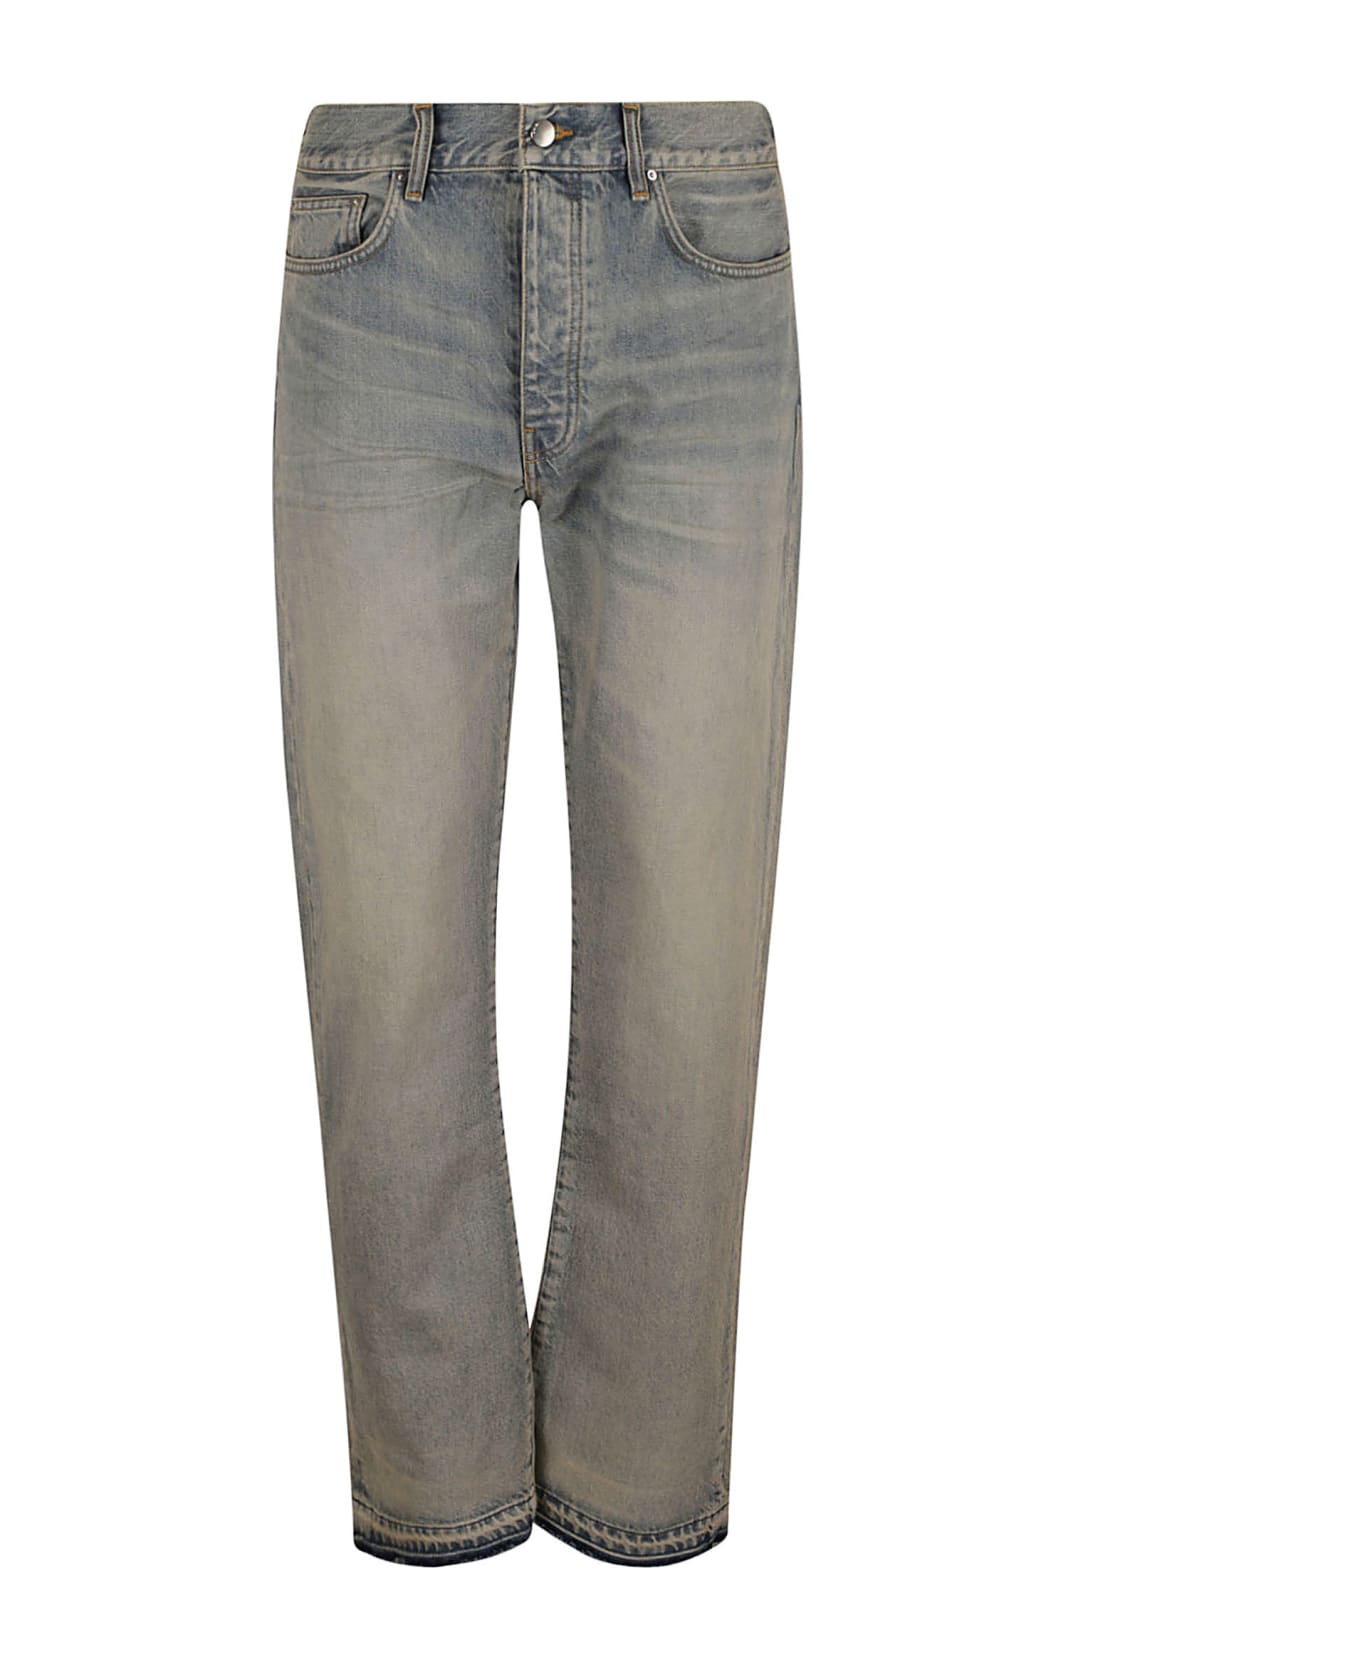 AMIRI Classic 5 Pockets Jeans - Antique Indigo